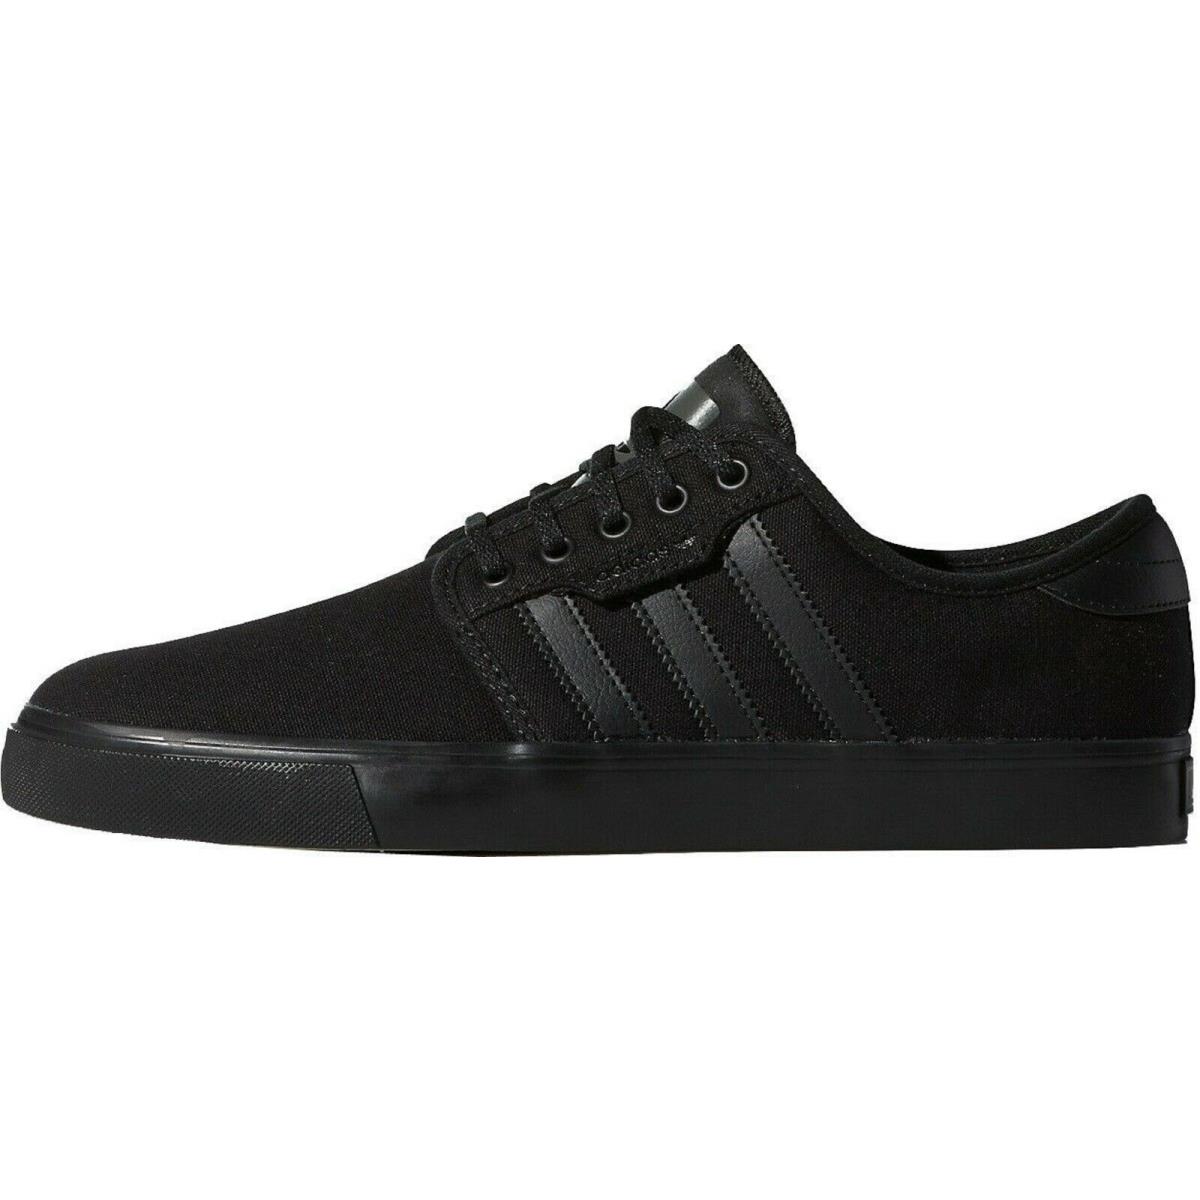 Adidas Men Seeley Skateboard Shoe Black/black/dark Cinder G98180